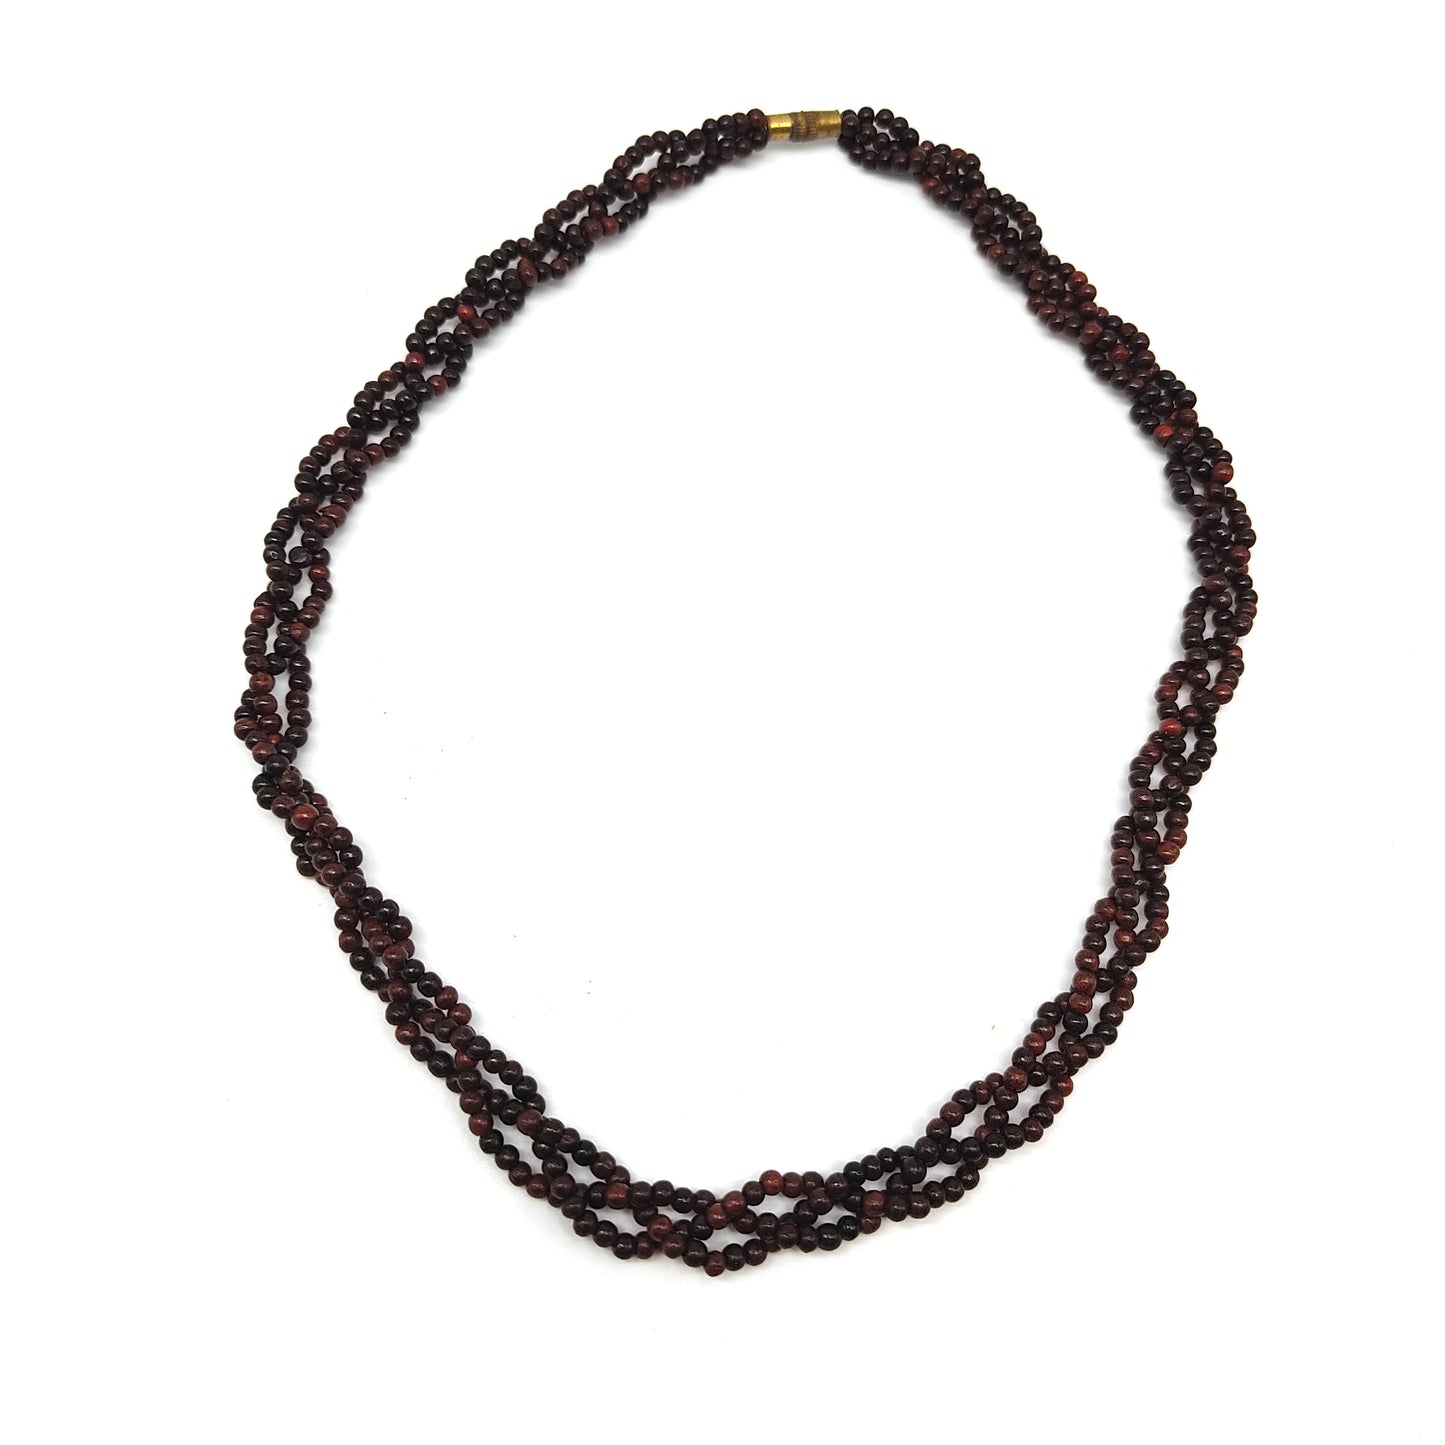 3-strand Natural Dark Beads Rosewood Handmade Braided Necklace 15" Long